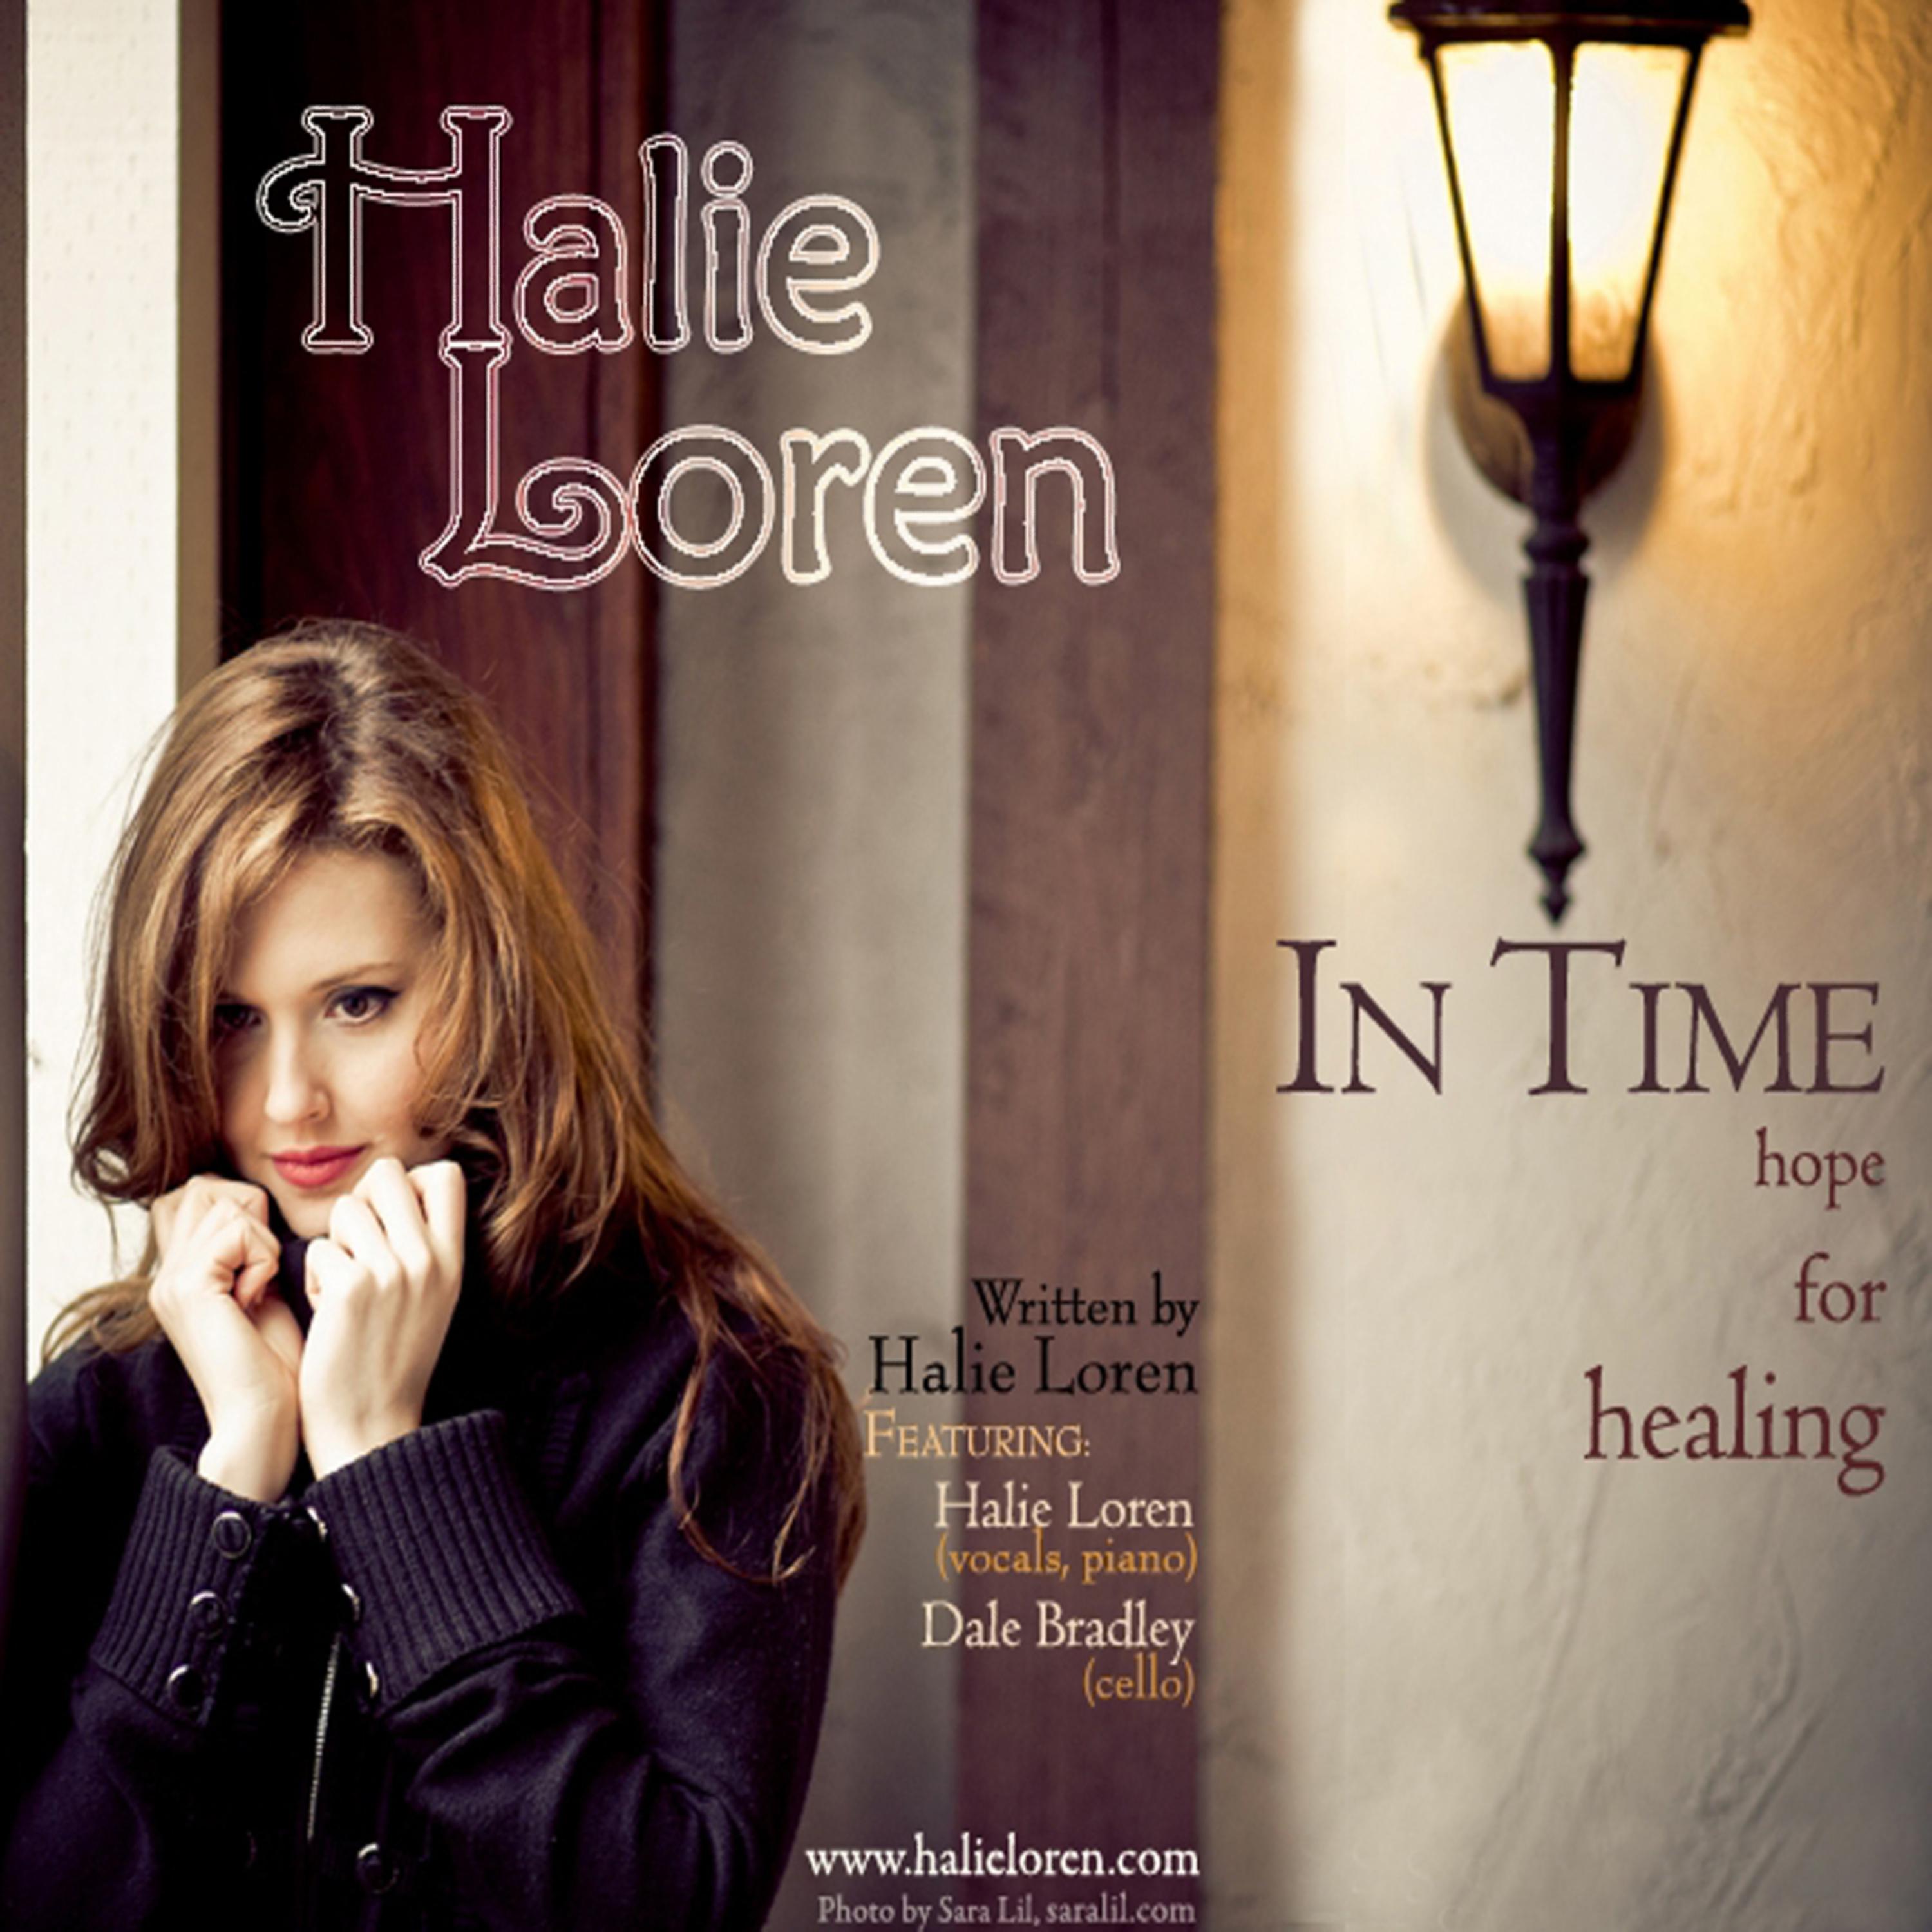 New time hope. Halie Loren фото. Heal певица. Loren (musician). Hope время.